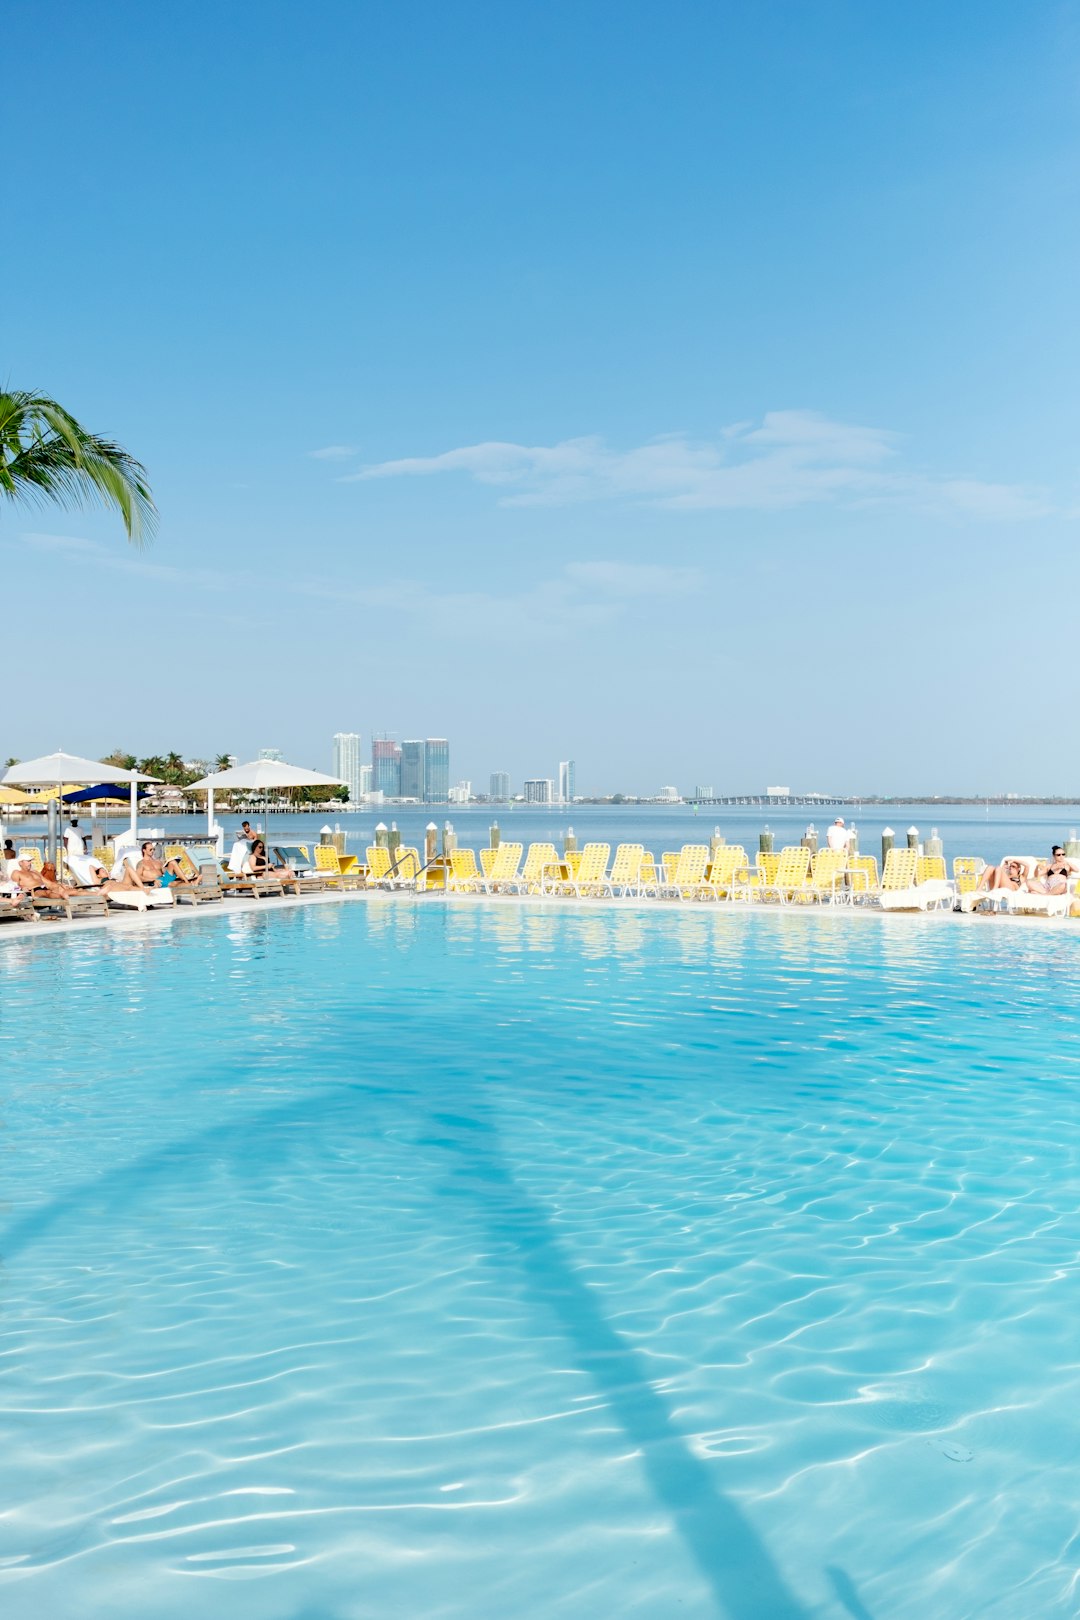 Resort photo spot The Standard Spa Miami